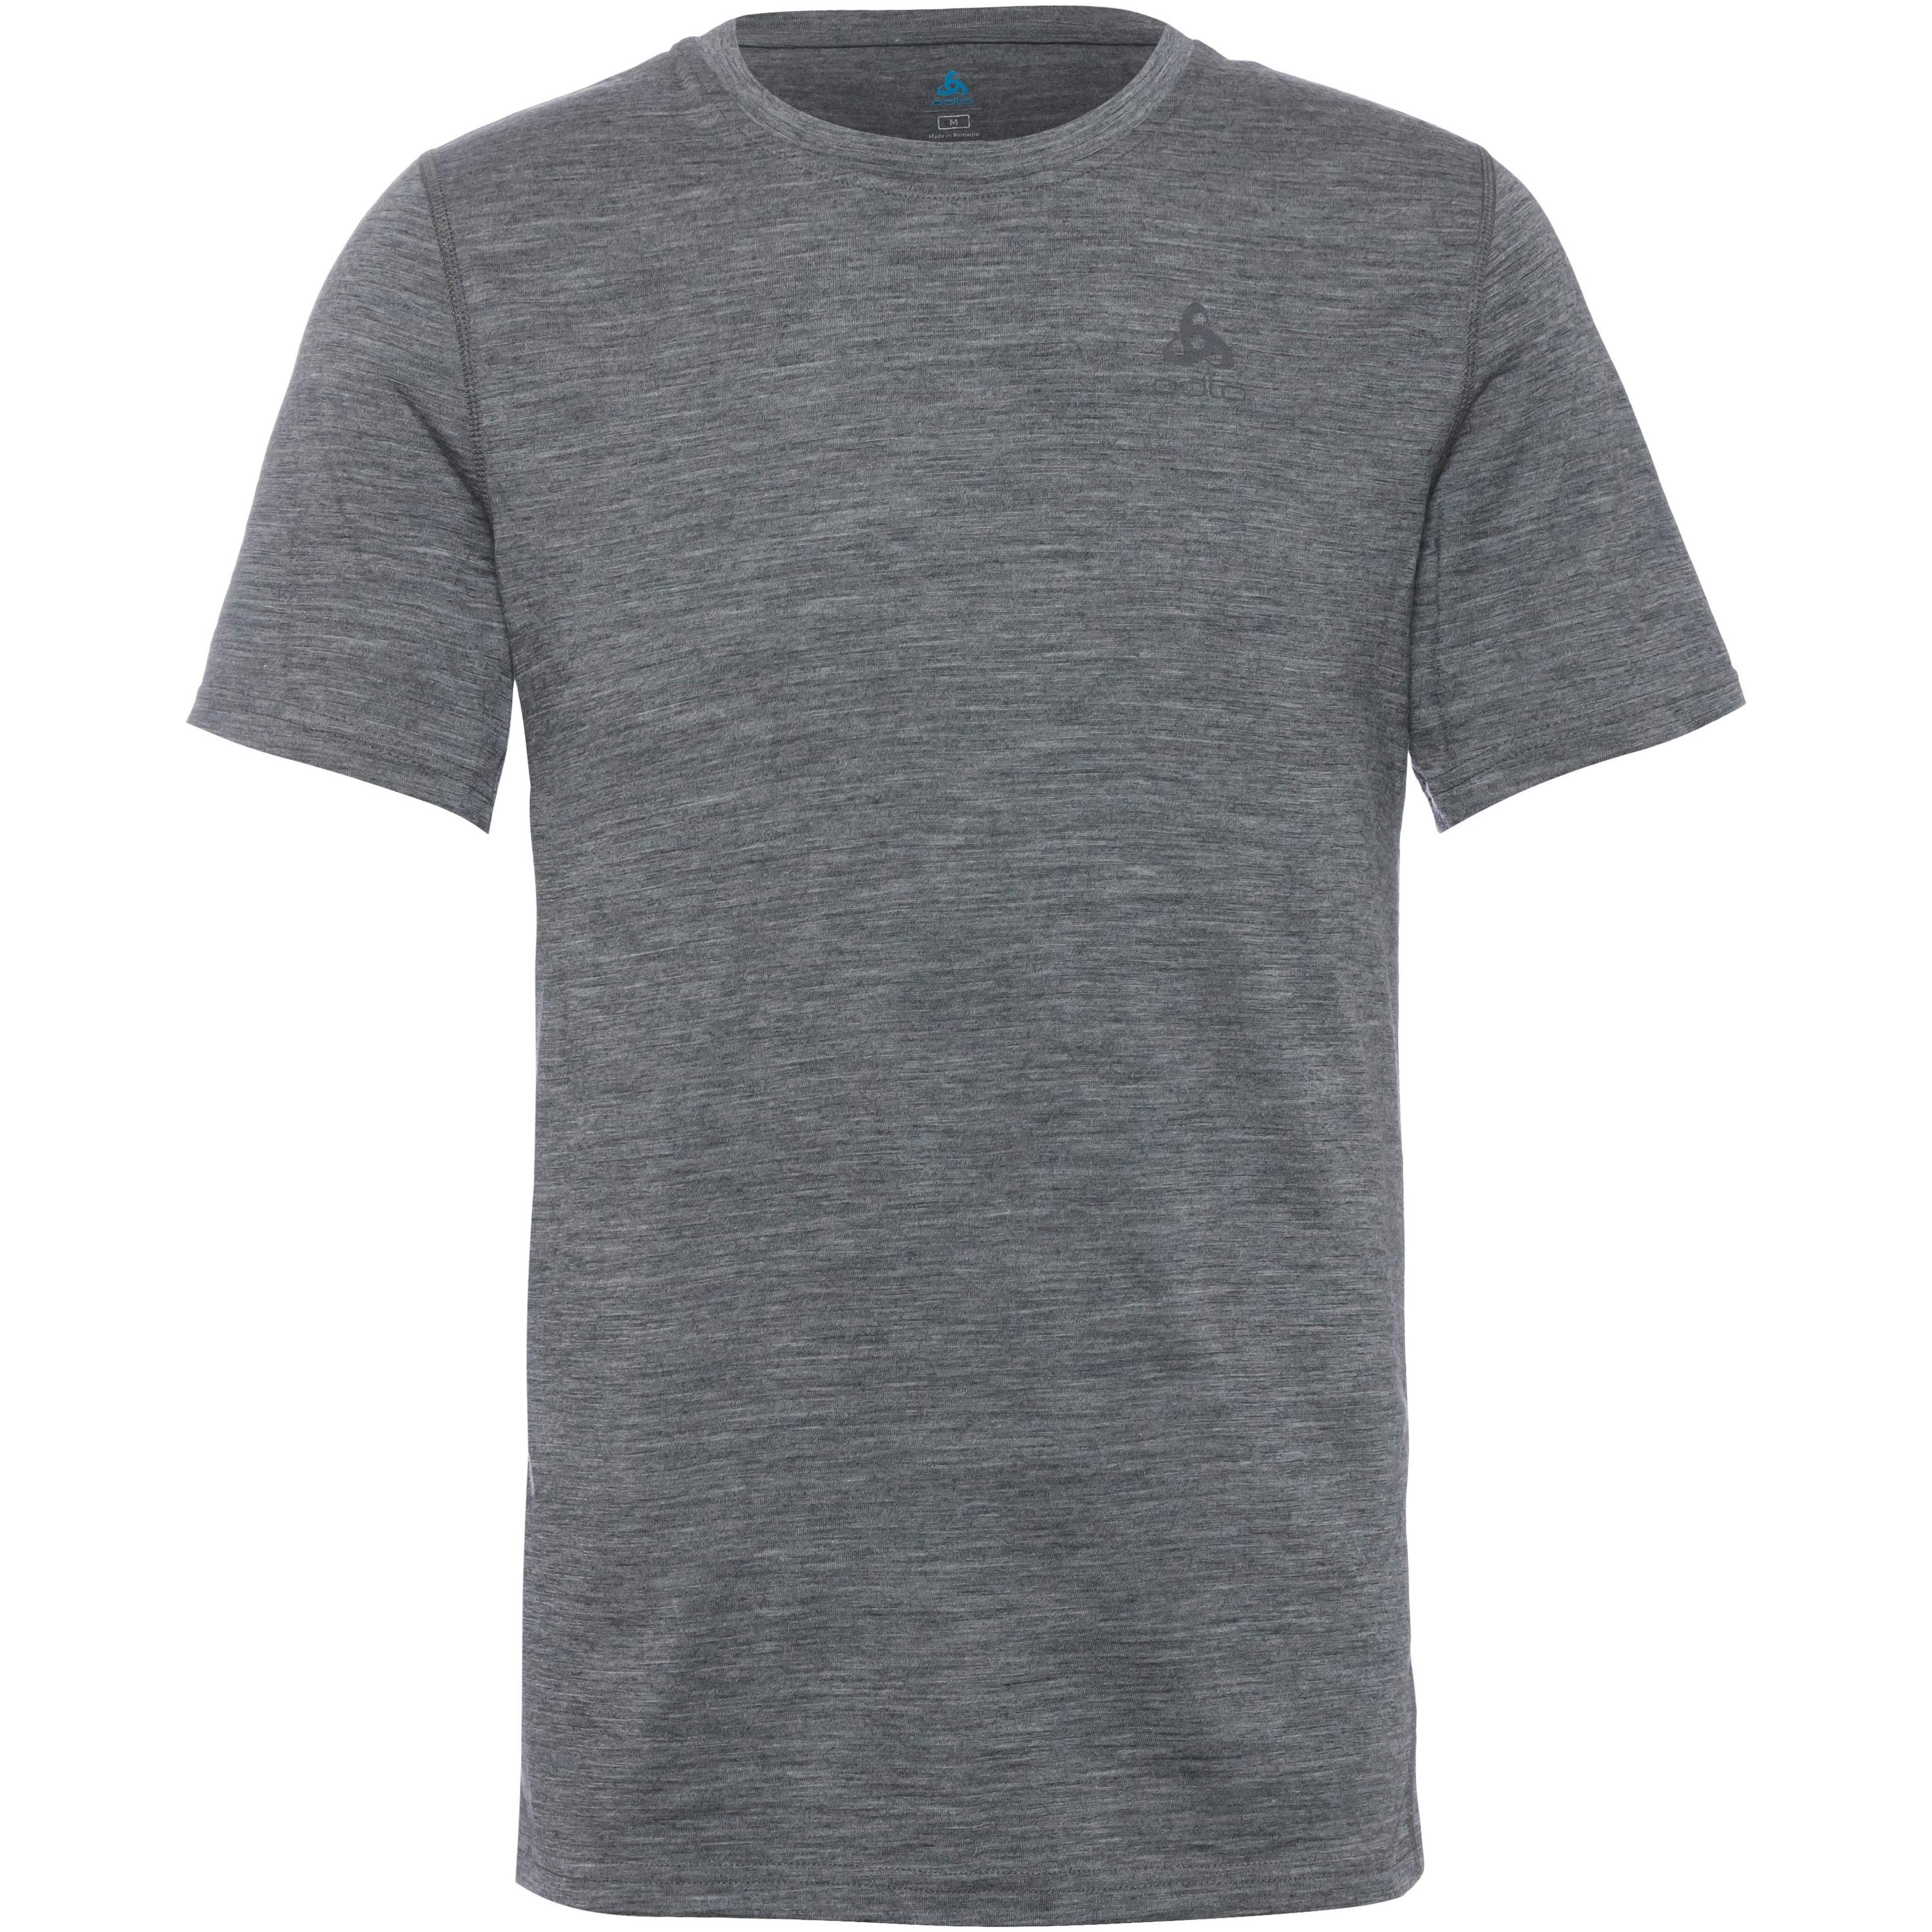 Рубашка Odlo Funktionsshirt Merino 200, цвет odlo steel grey melange цена и фото